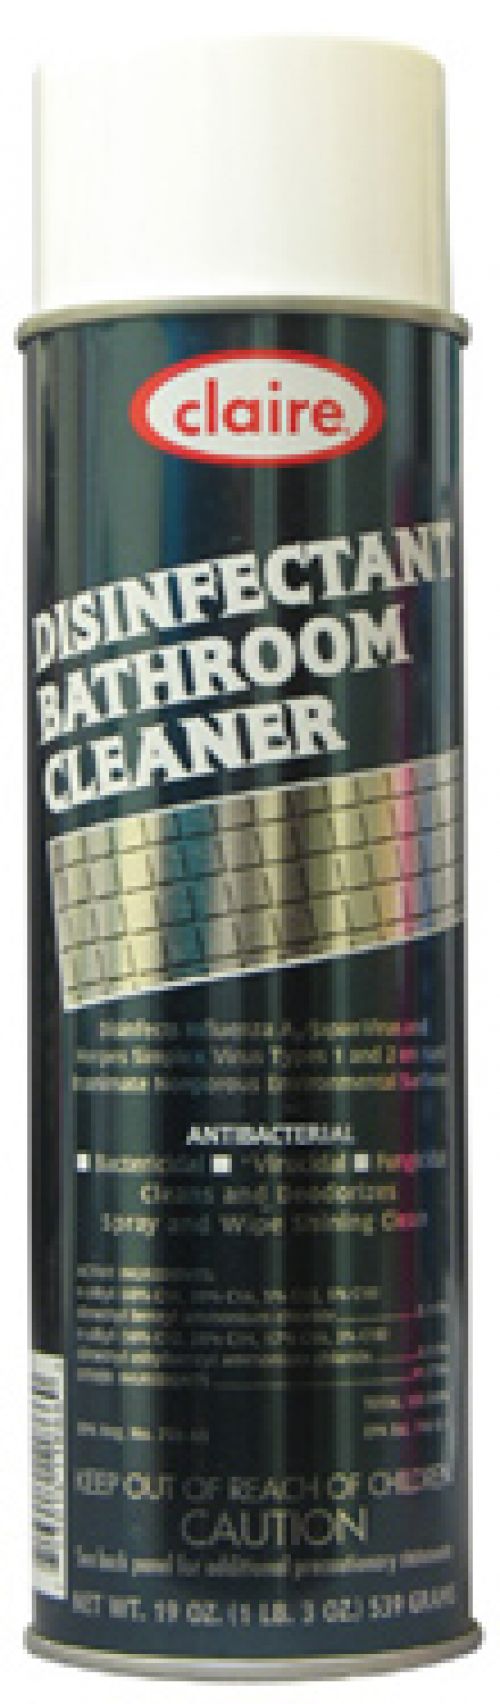 Disinfectant Bathroom Cleaner